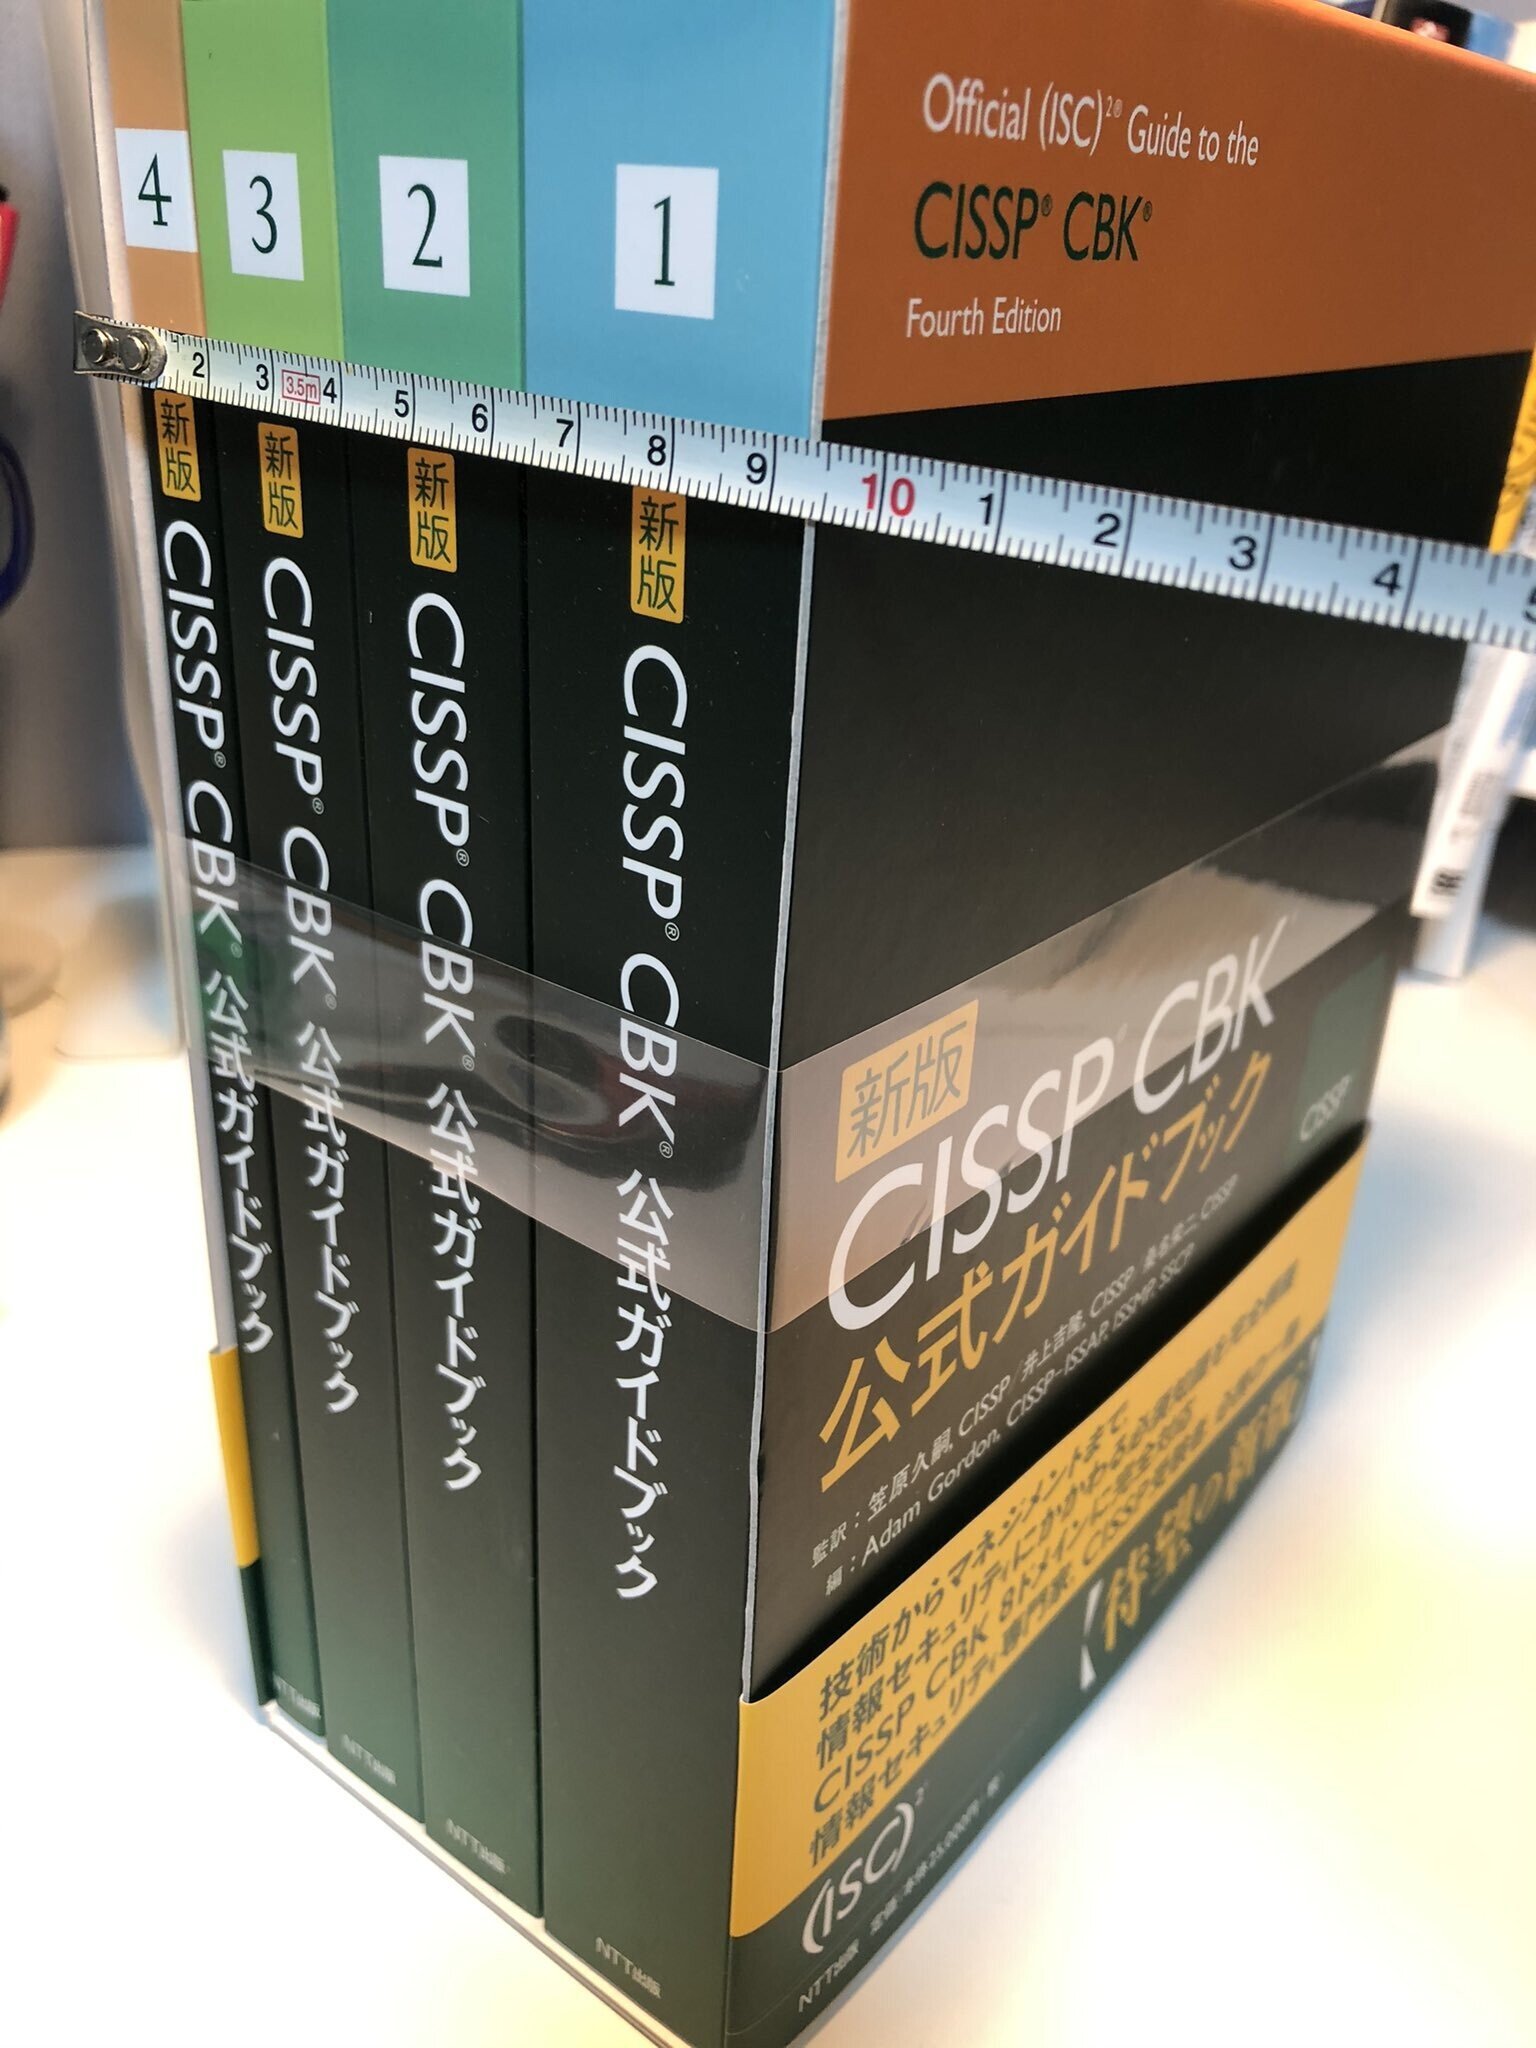 CISSP Official Student Guide 第6版 日本語版 - コンピュータ/IT